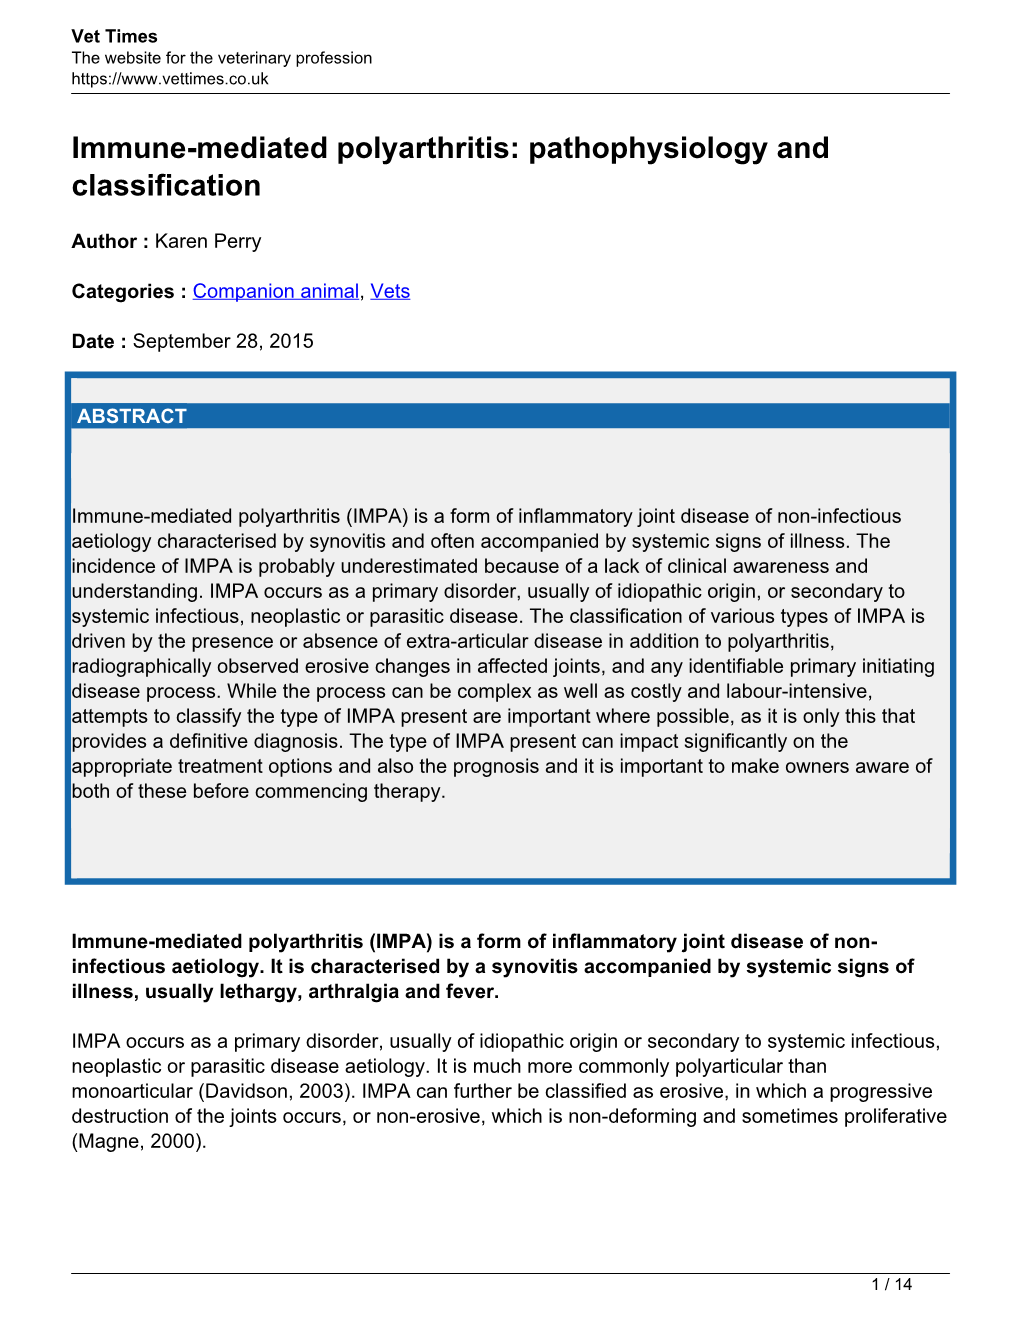 Immune-Mediated Polyarthritis: Pathophysiology and Classification